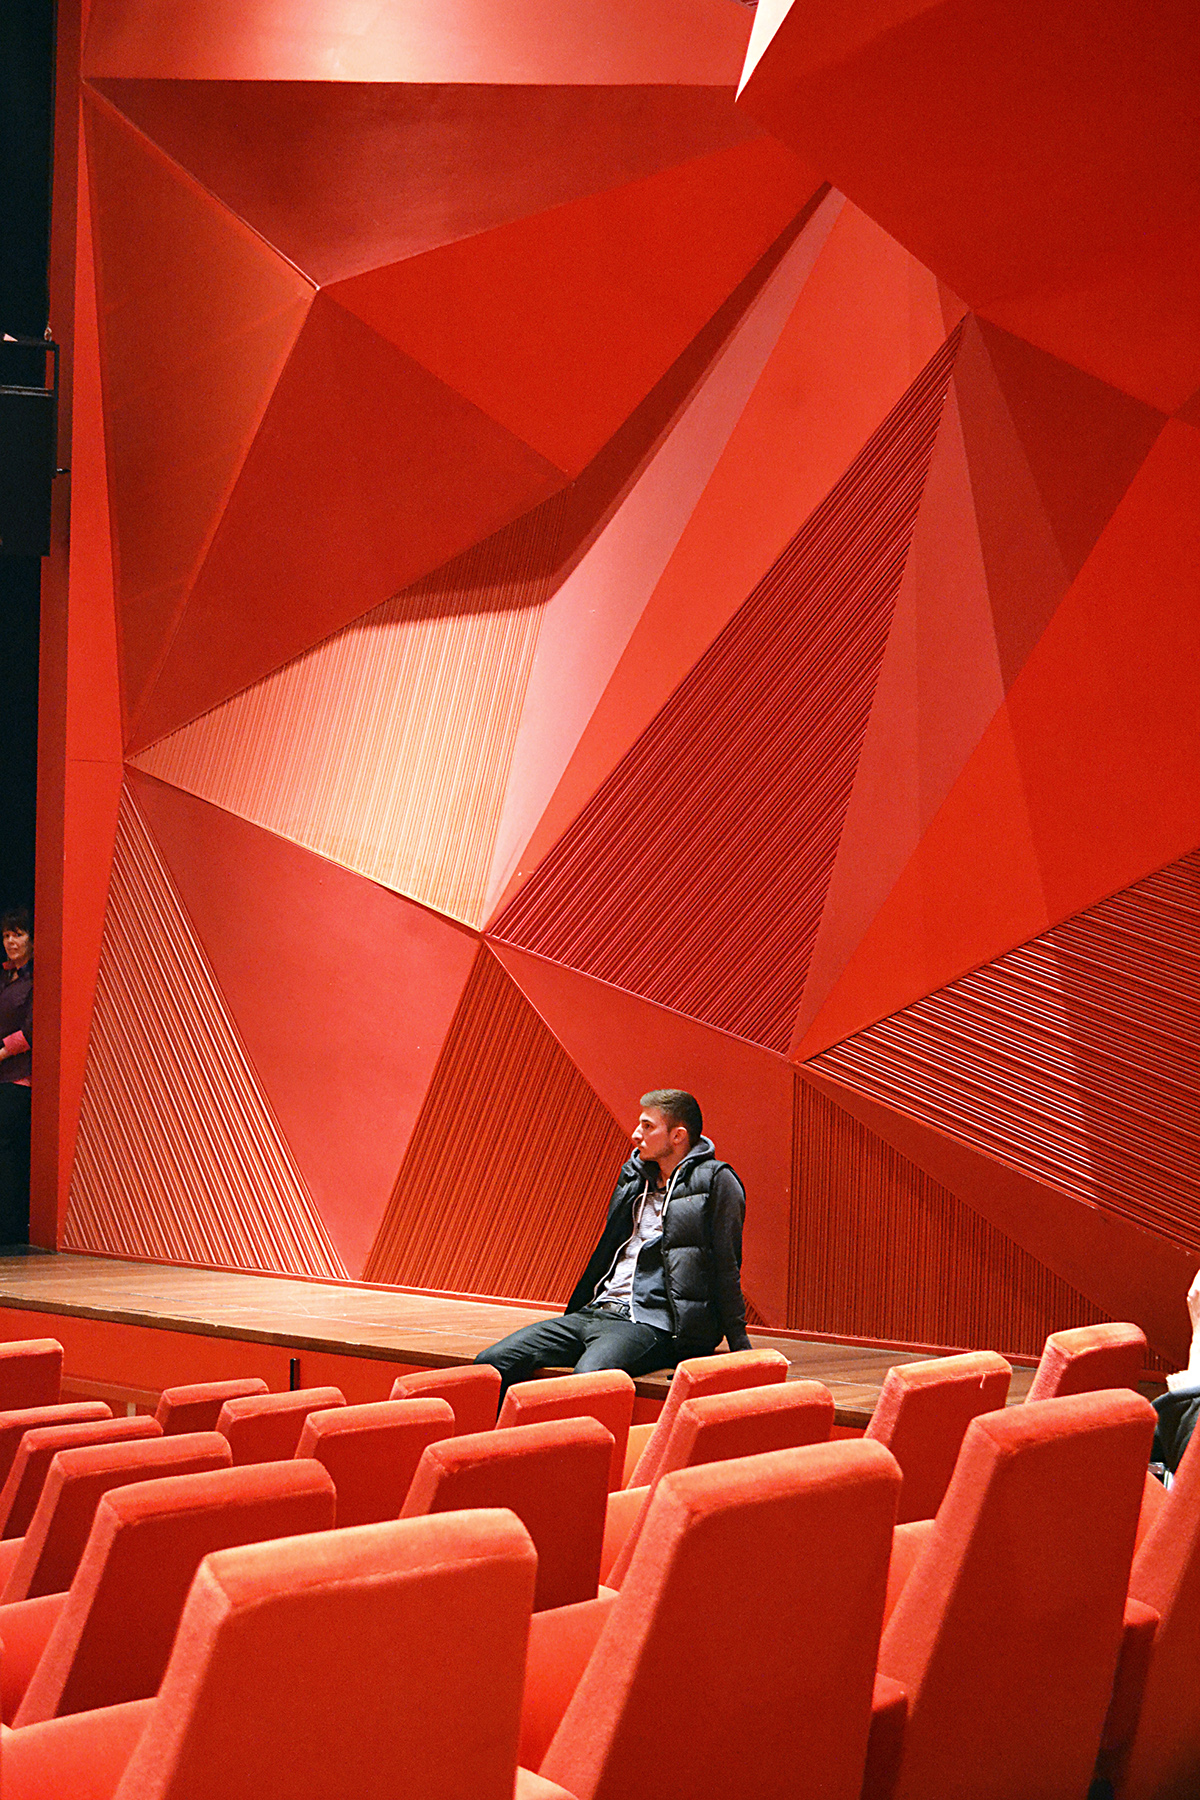 Cinema red Netherlands Lelystad un studio Theatre congress centre agora